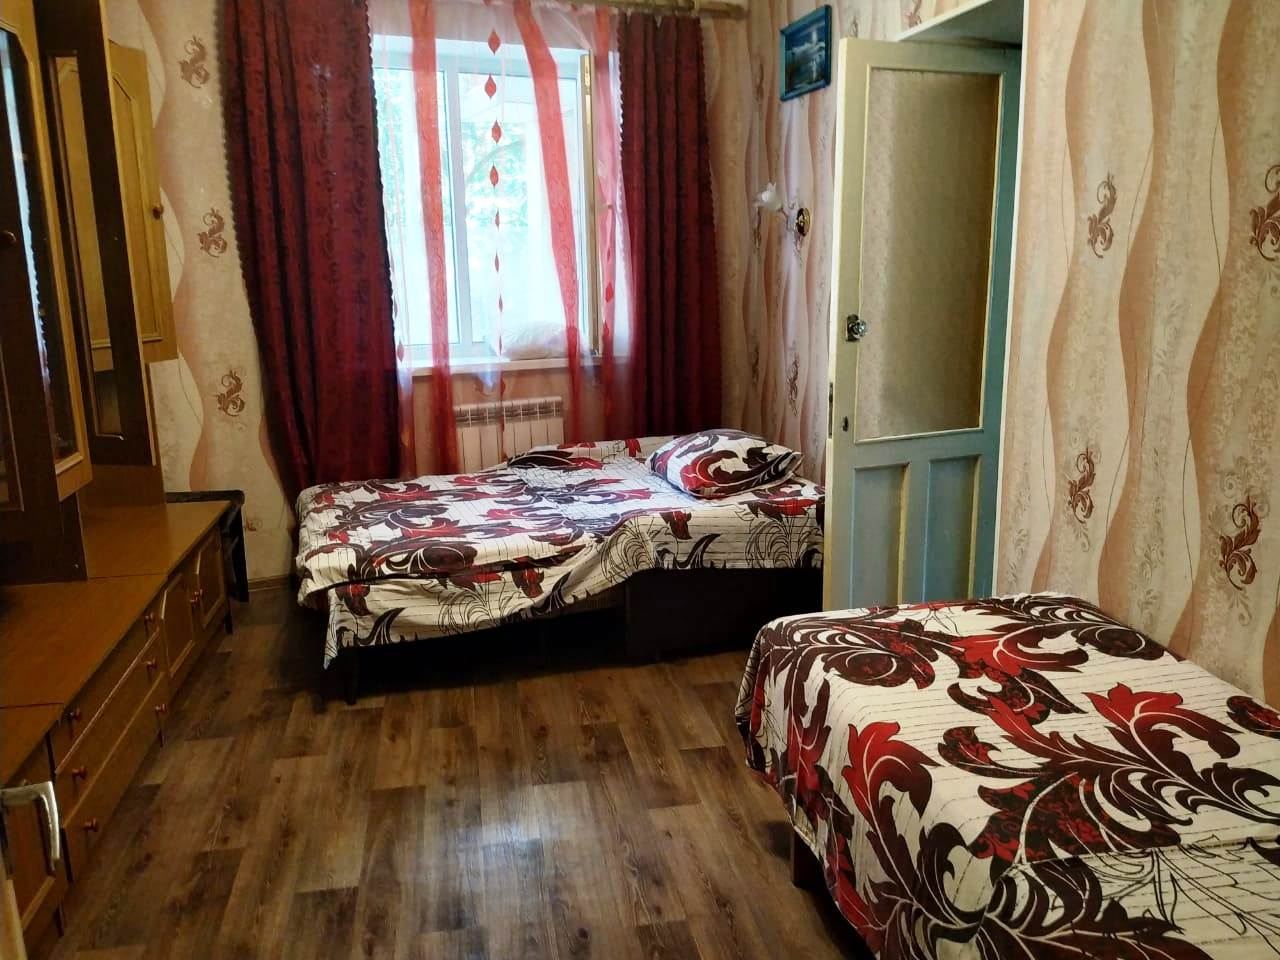 Трёхкомнатная квартира на ул.Толстого 6 (60кв.м) до 6 гостей